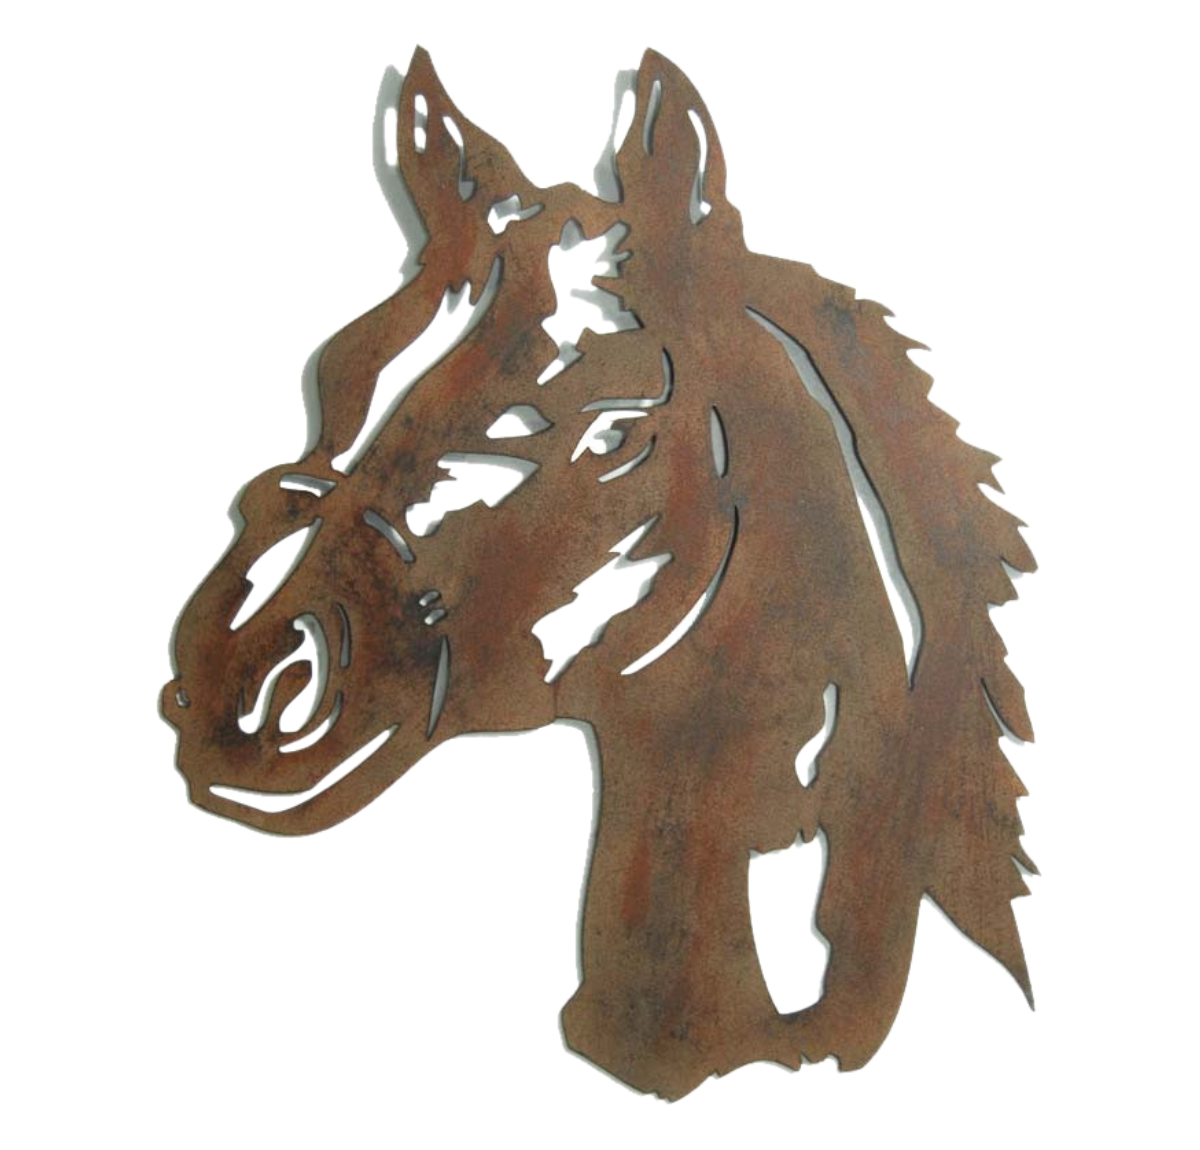 Rustic Horse Silhouette Metal Art Wall Hanging - Brown